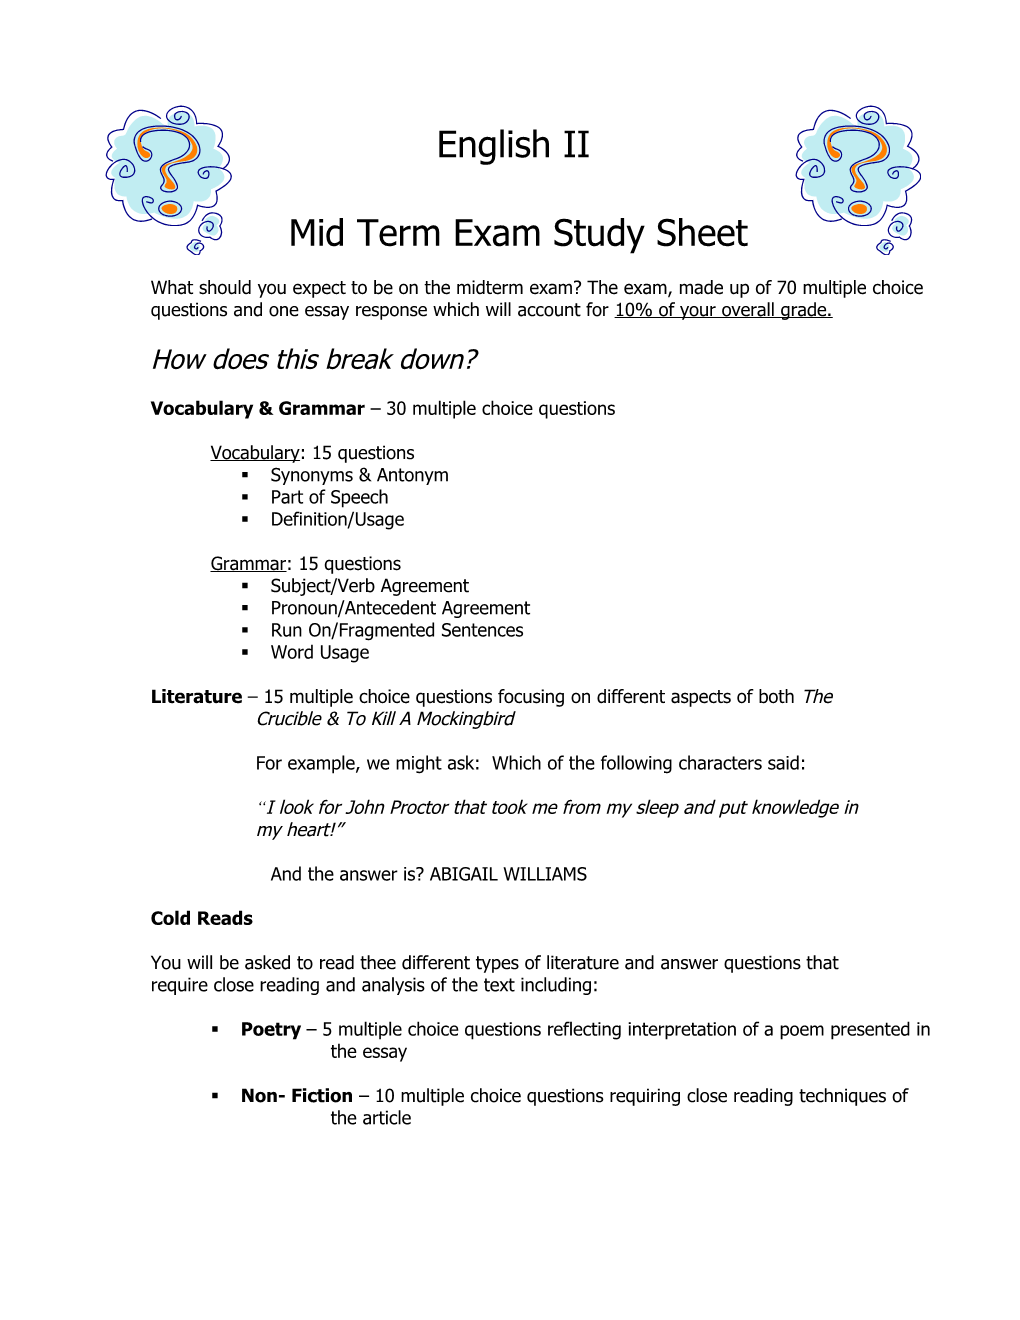 Mid Term Exam Study Sheet